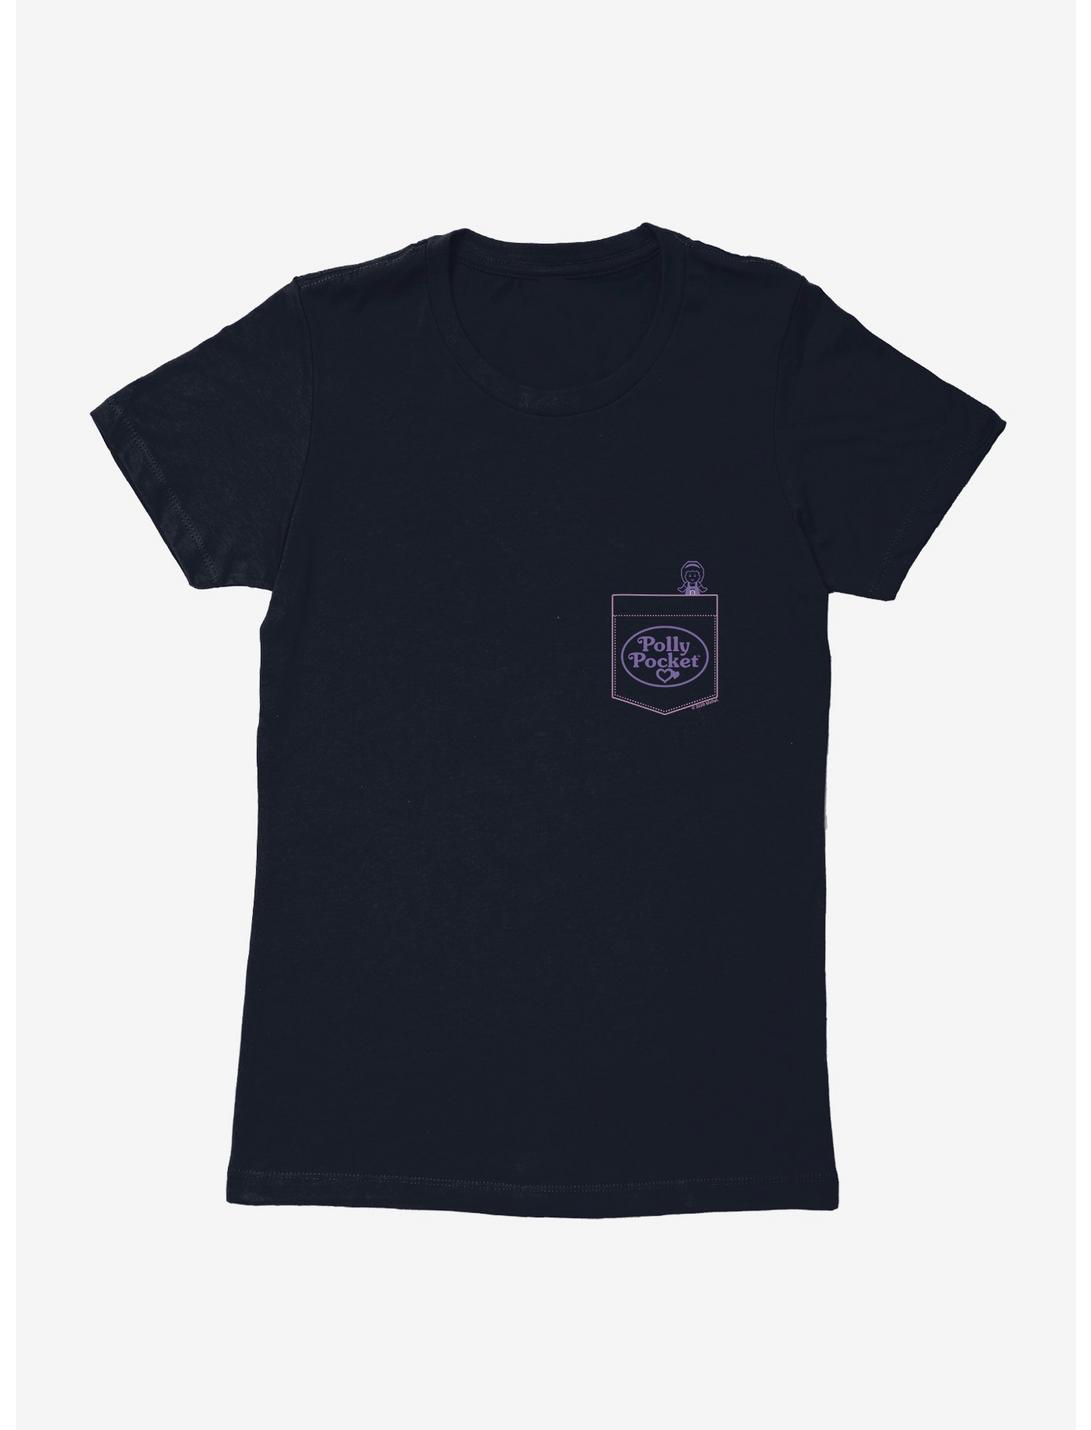 Polly Pocket Faux Pocket Icon Womens T-Shirt, MIDNIGHT NAVY, hi-res